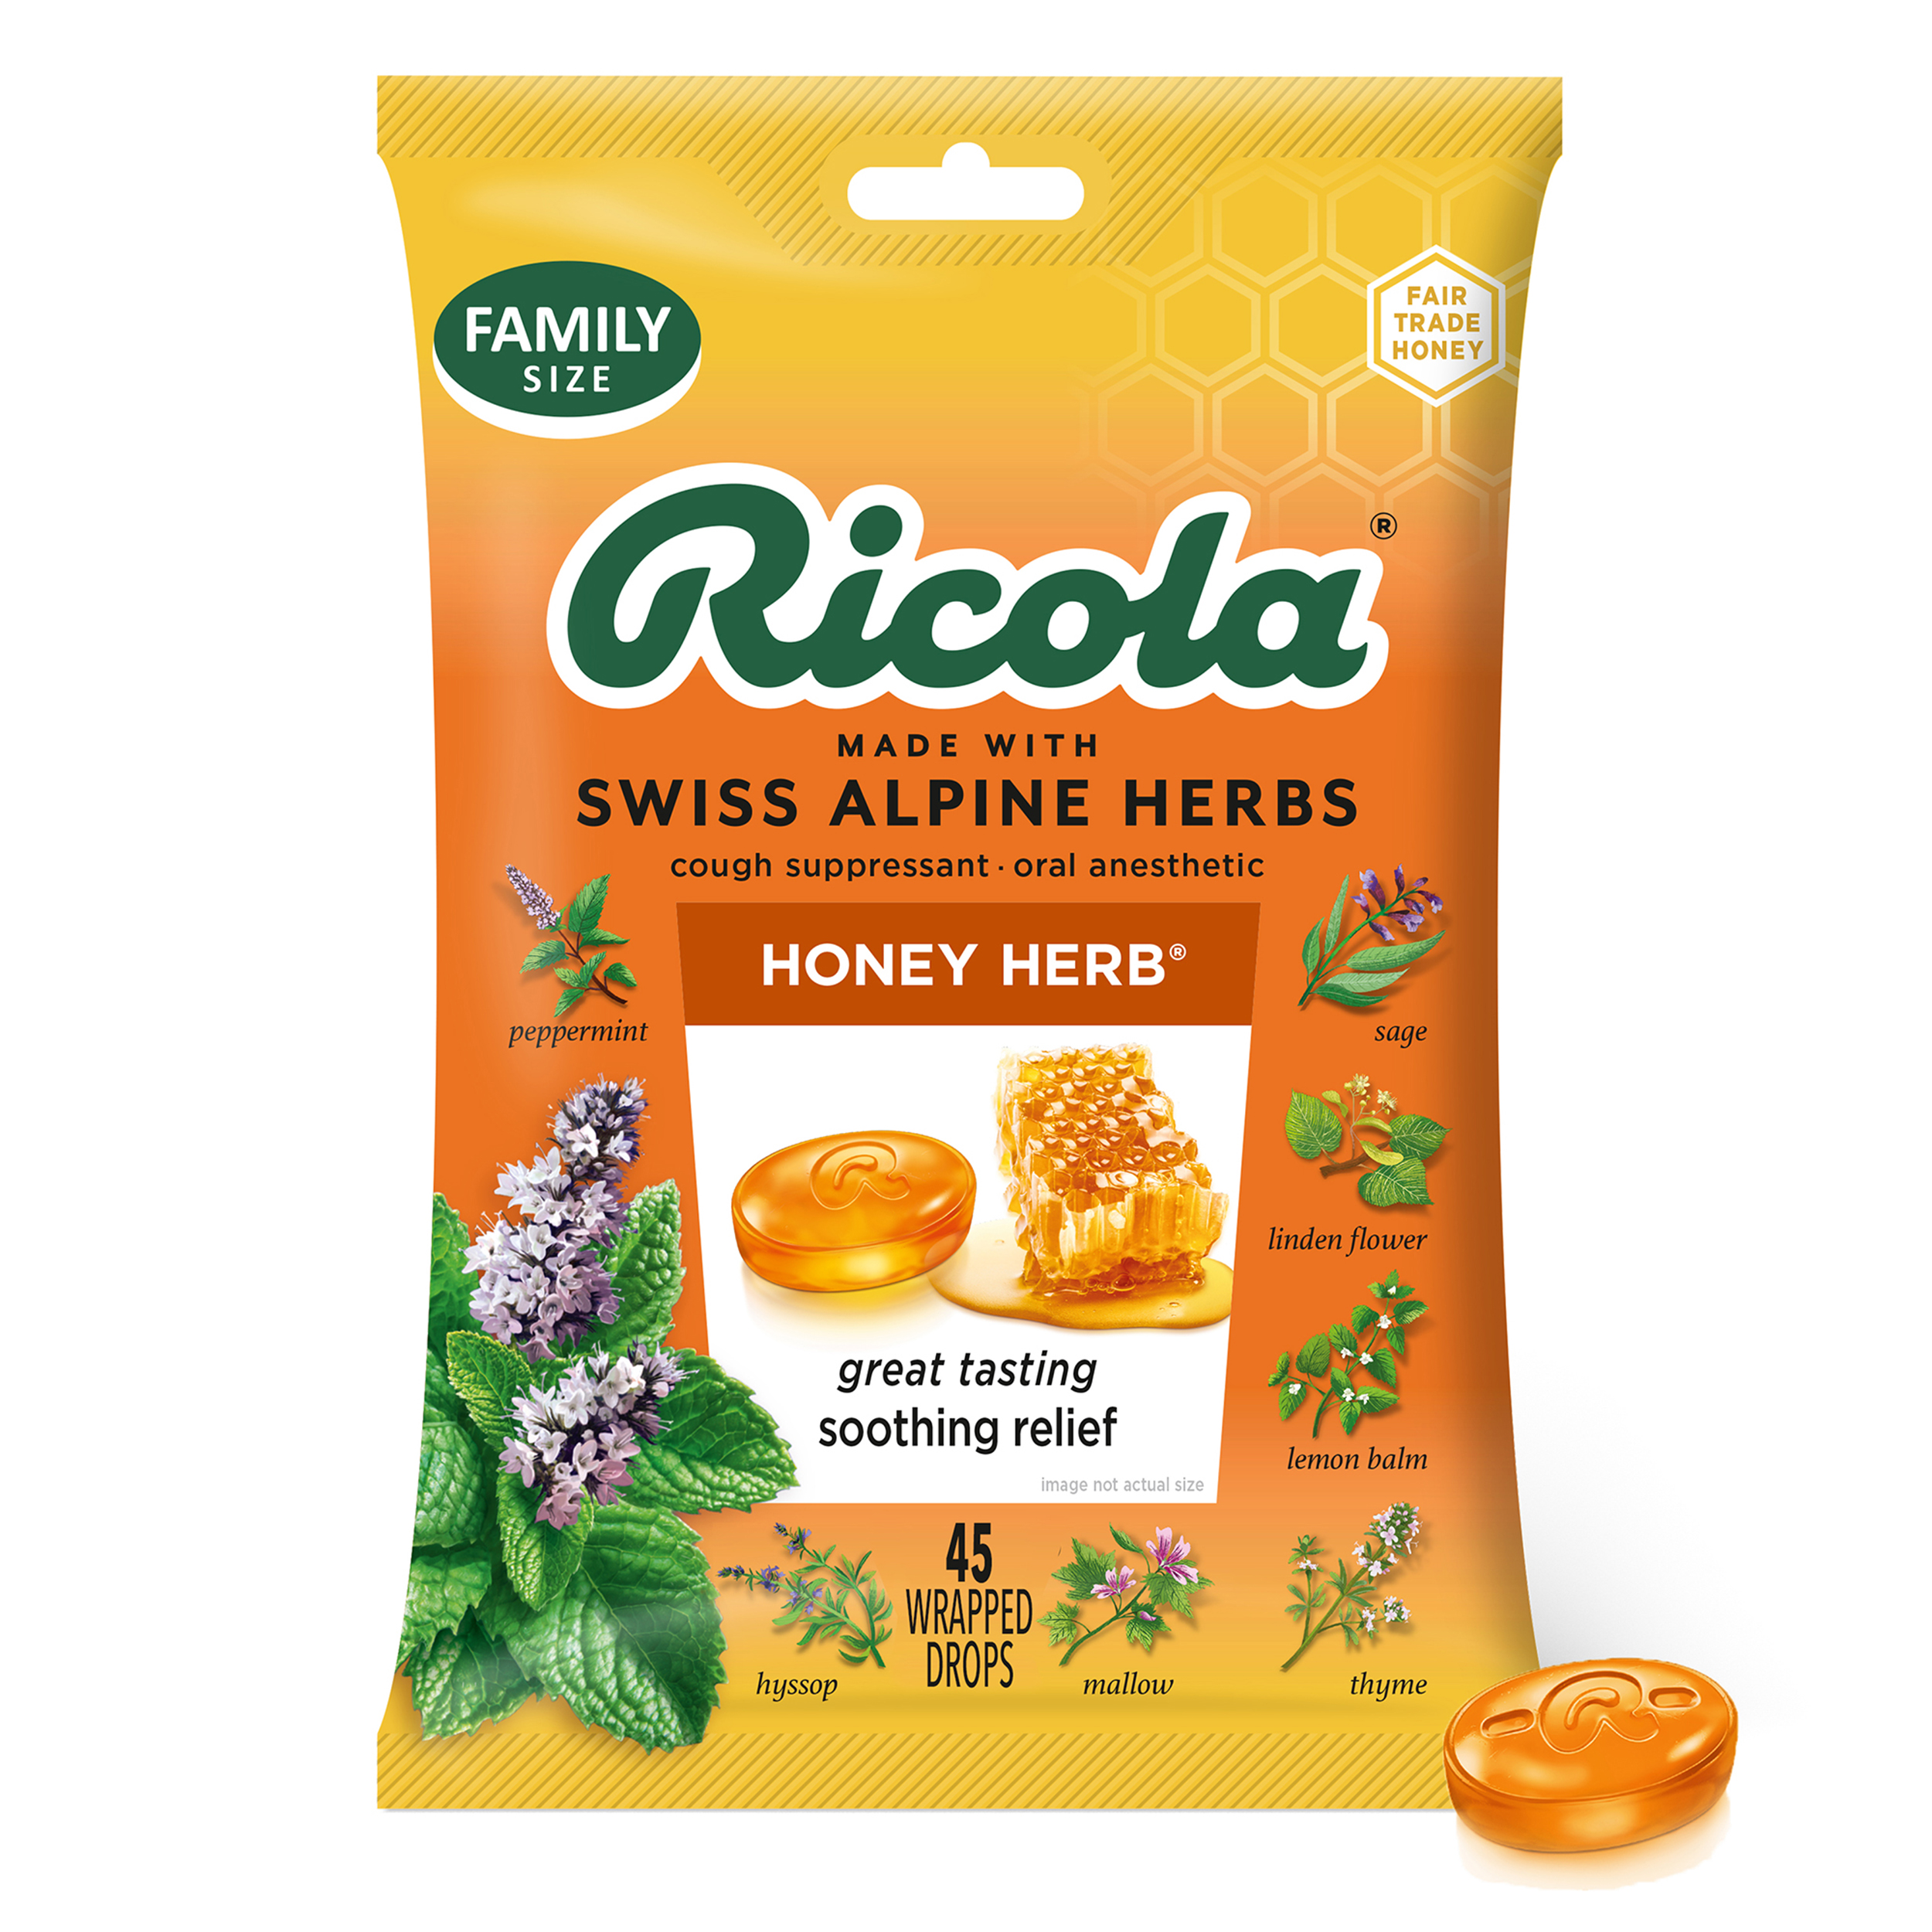 Licorice Candy - 1kg jar RICOLA